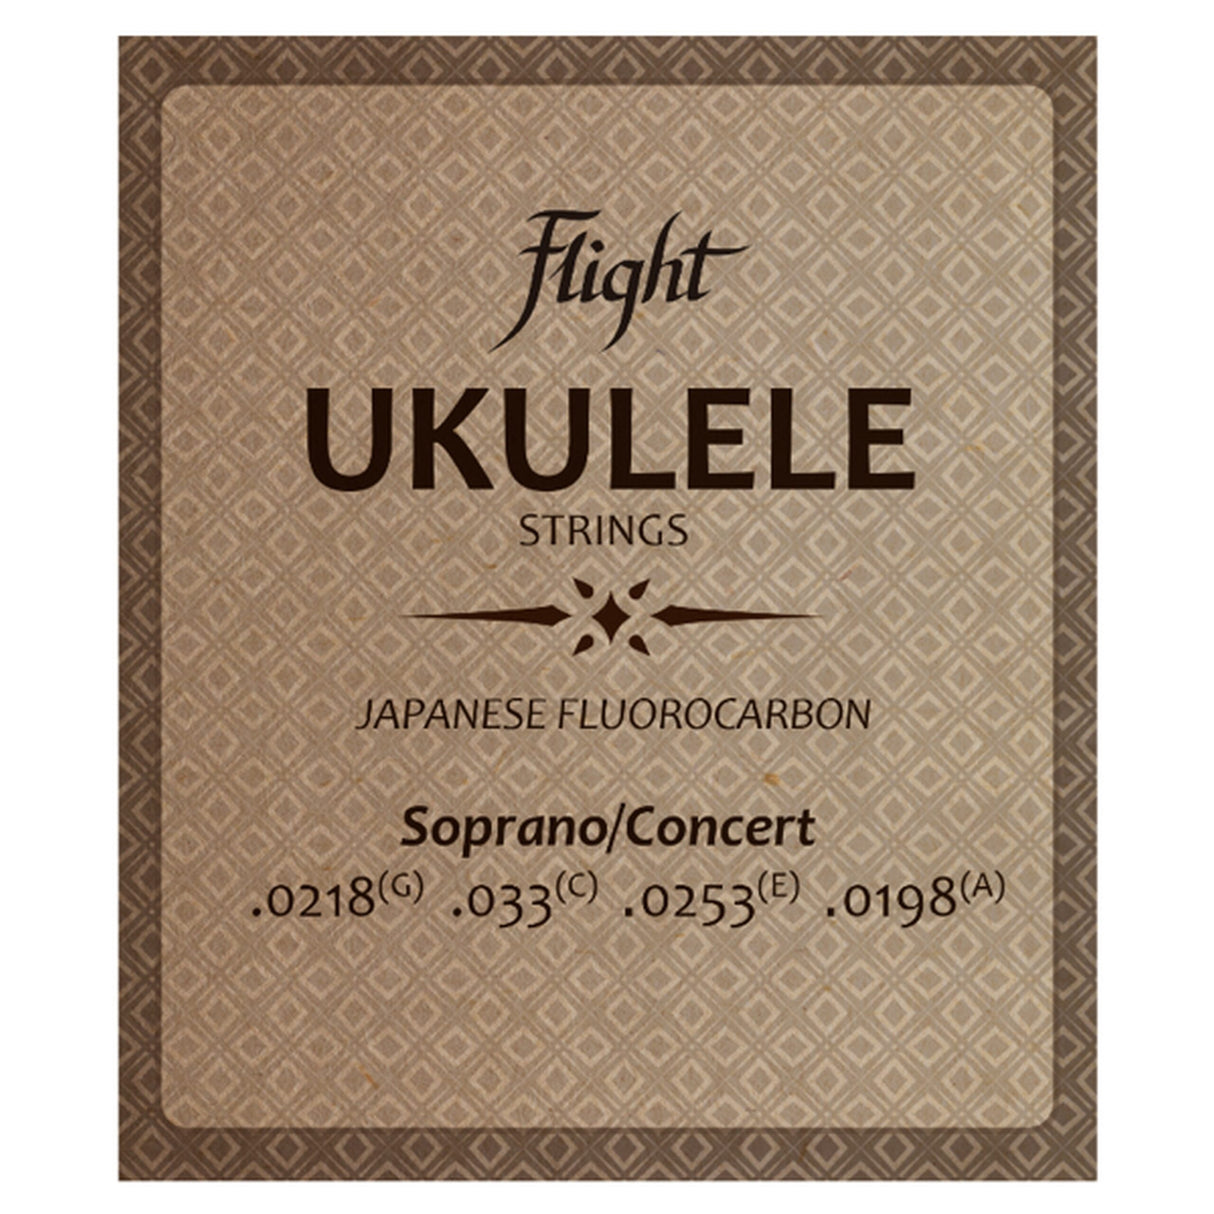 Flight FUSSC100 Fluorocarbon Ukulele Strings, Soprano/Concert